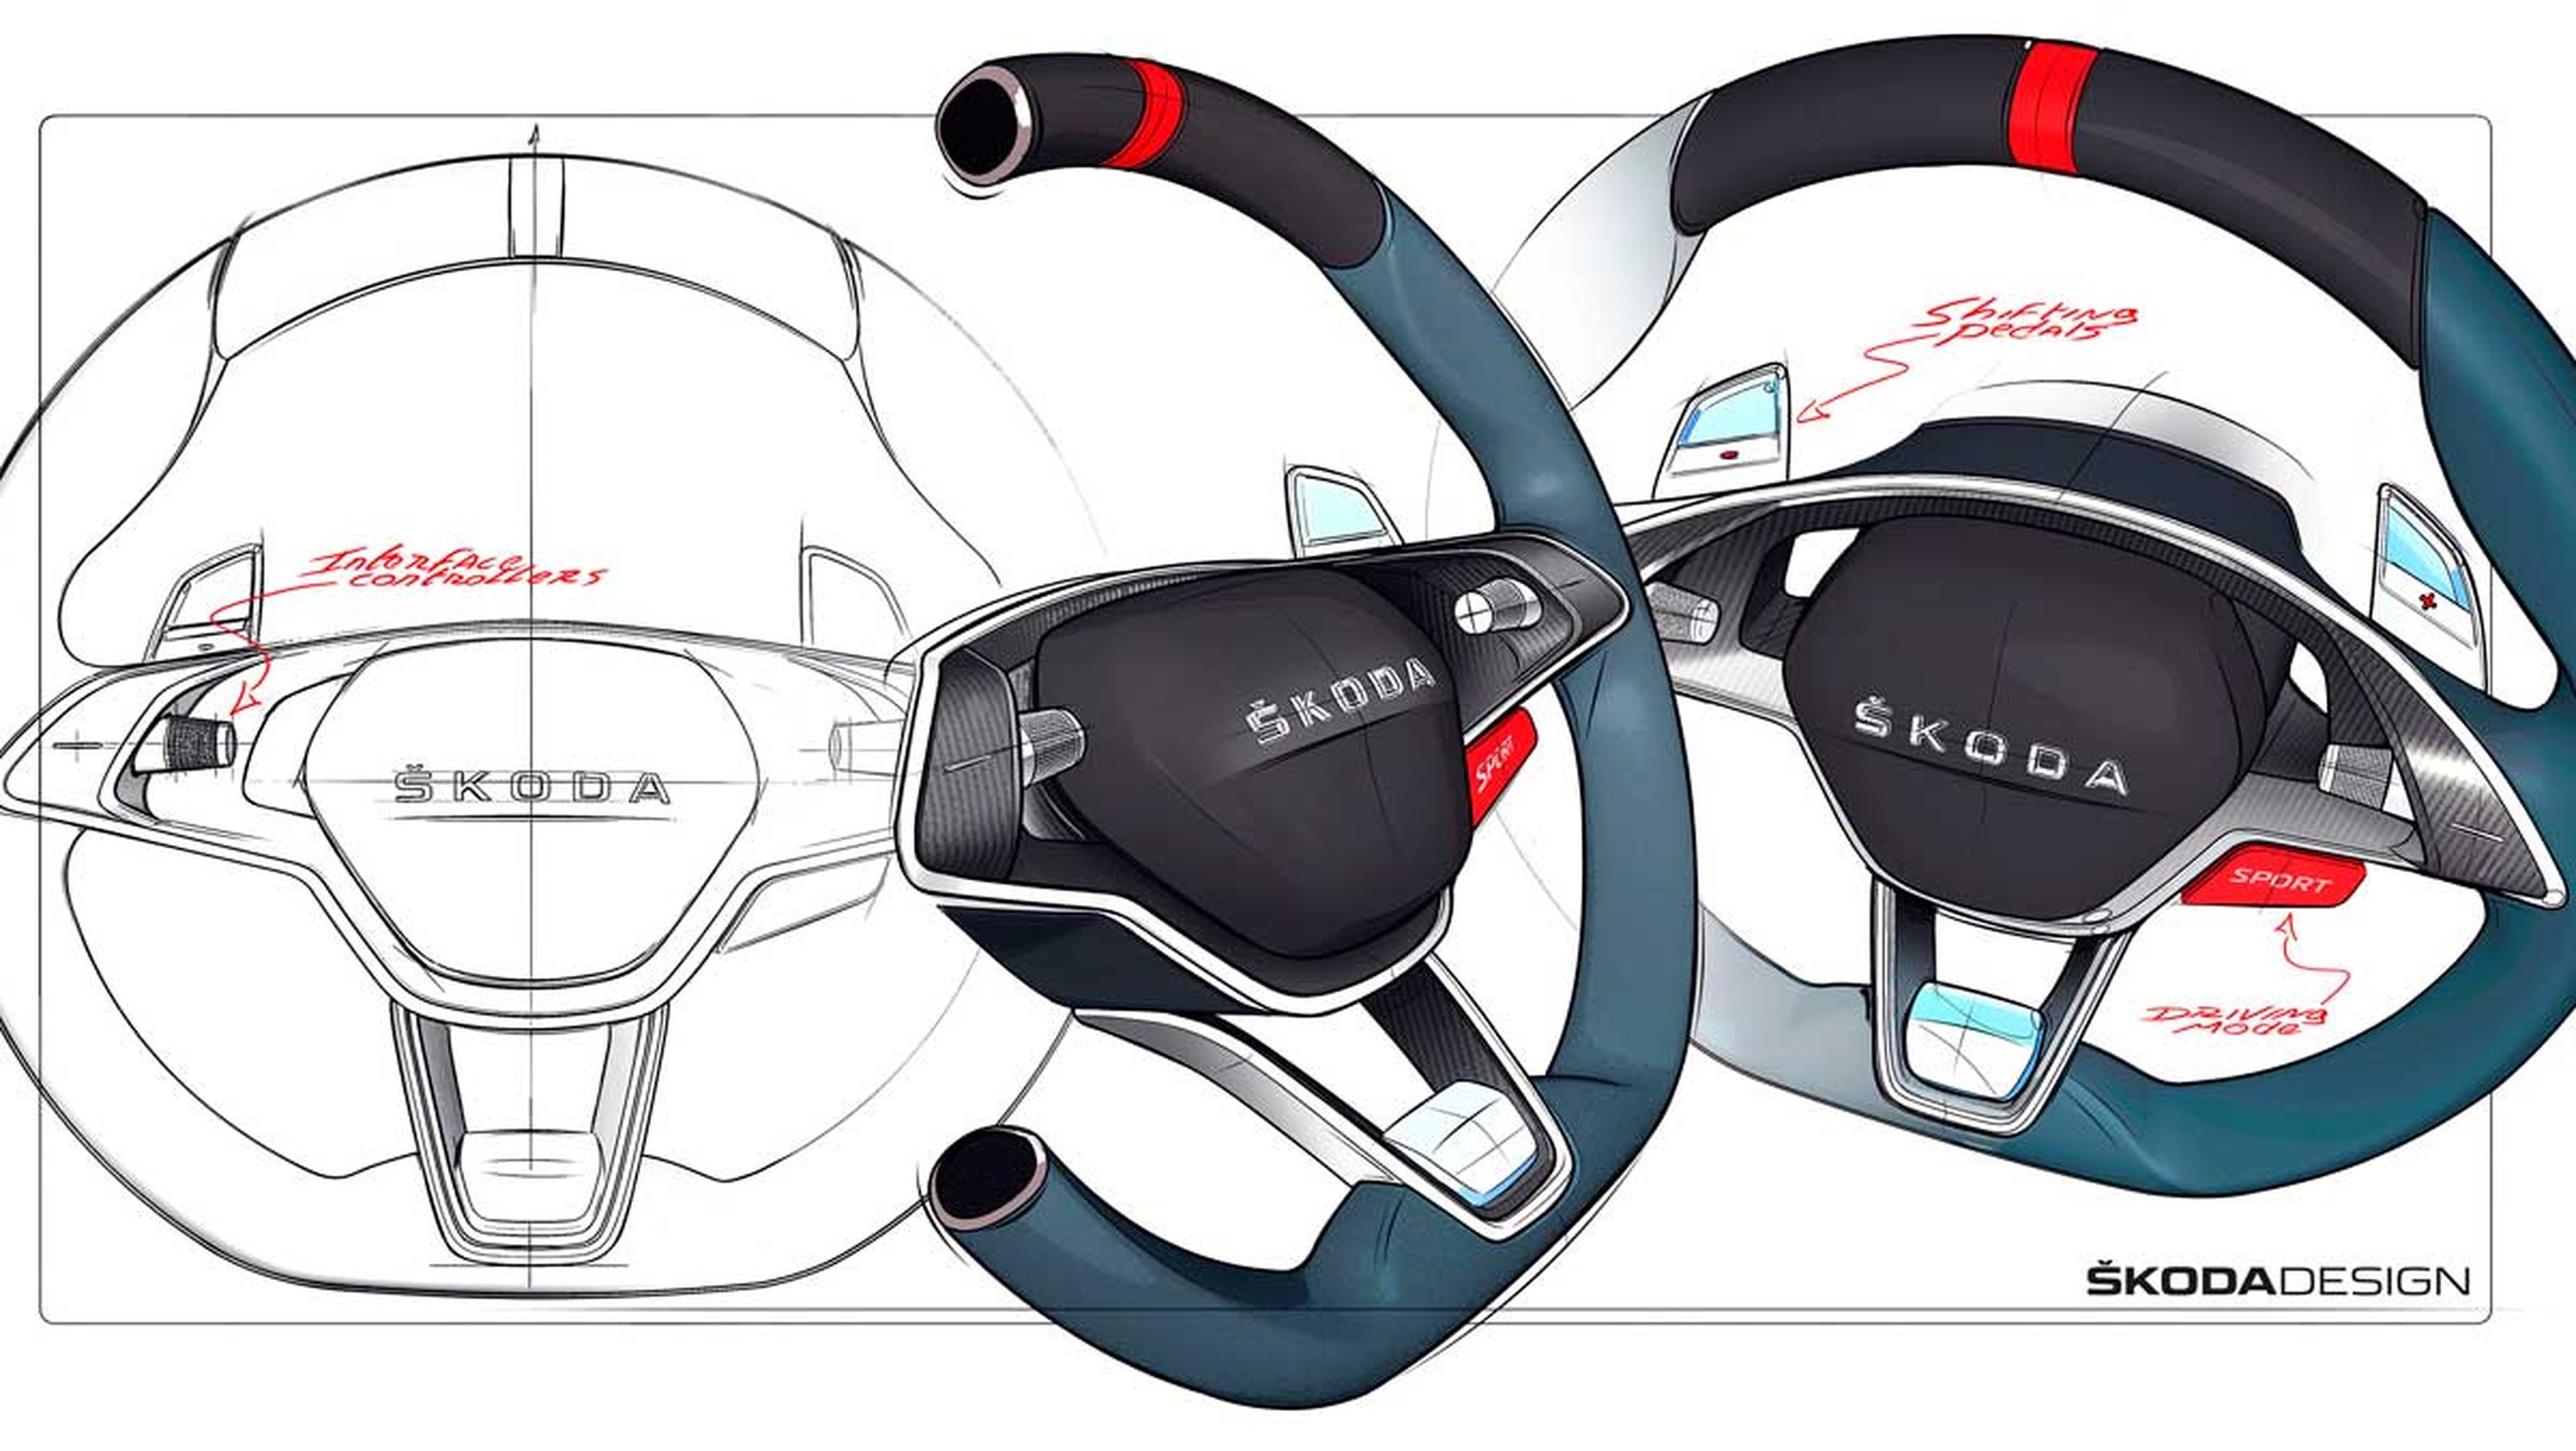 Skoda Vision RS Concept